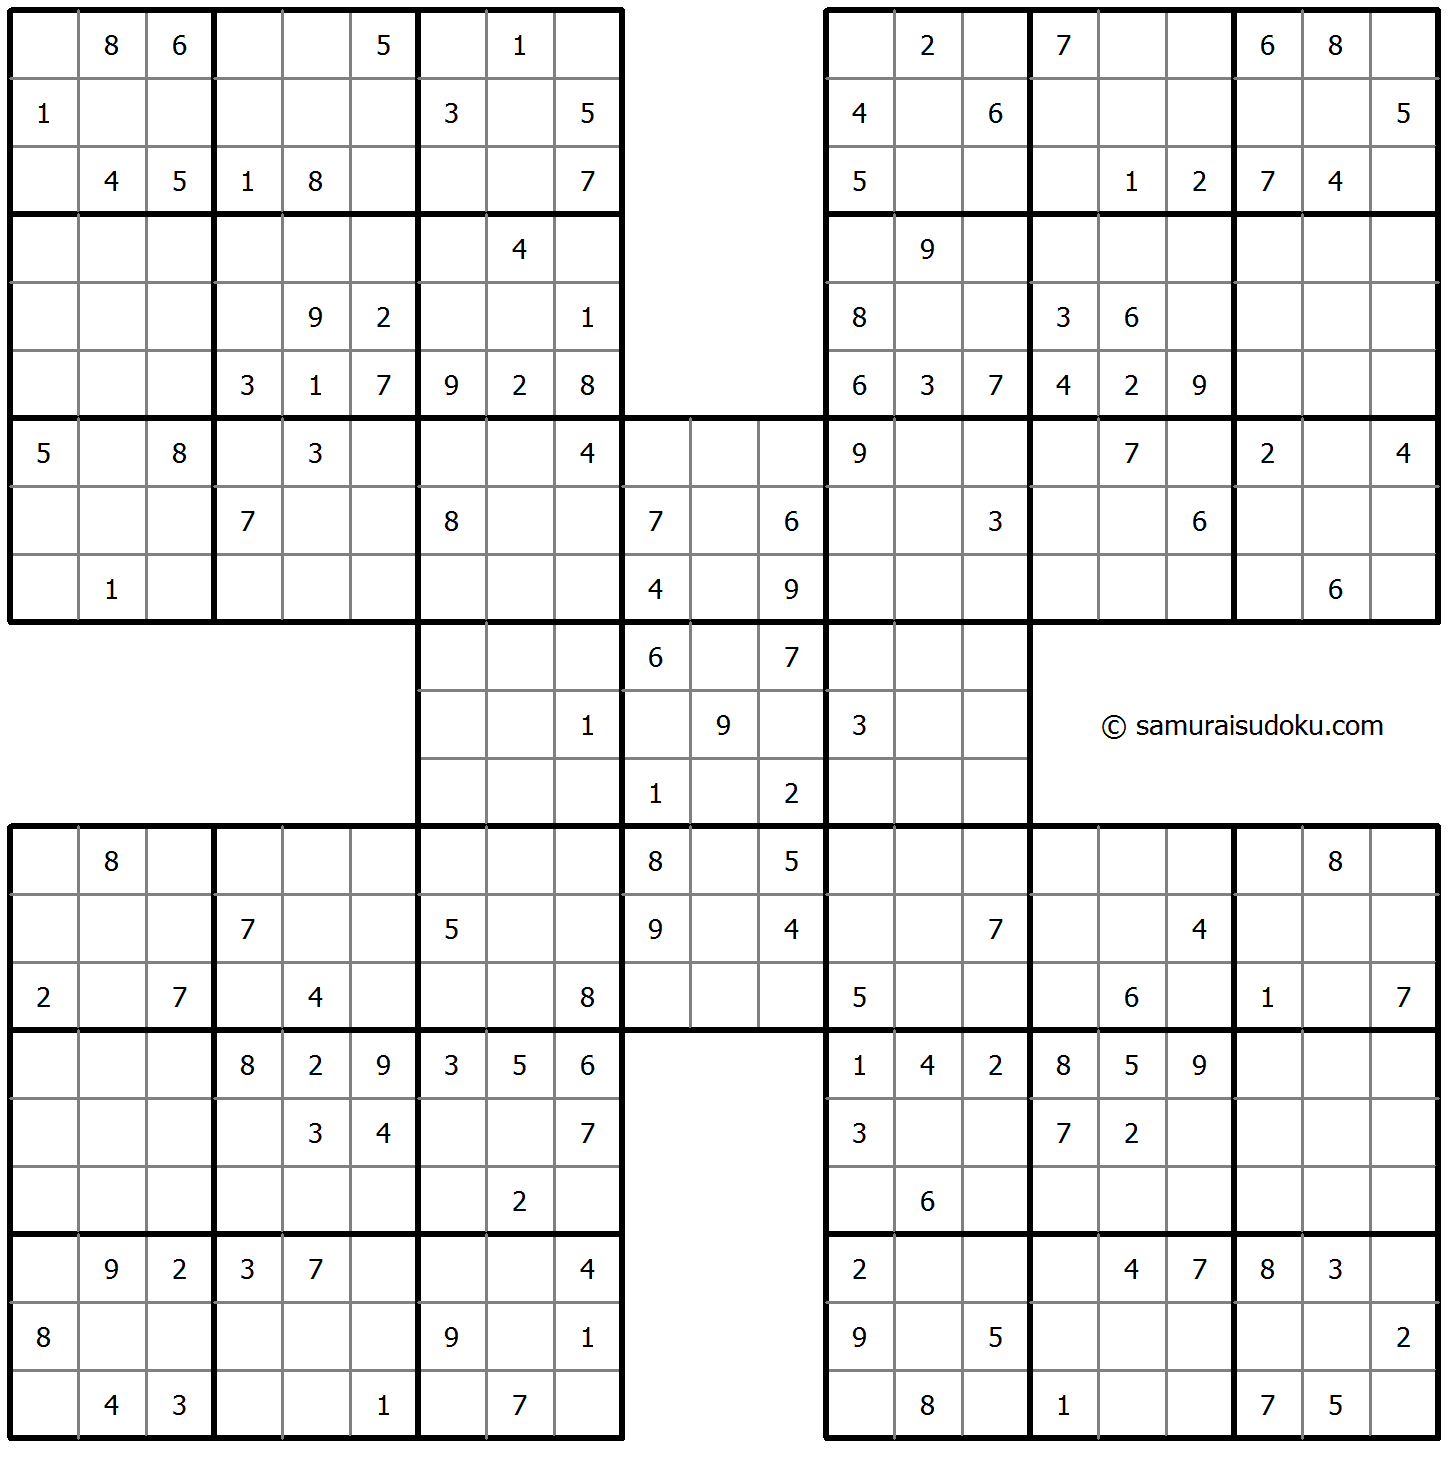 Samurai Sudoku 24-May-2021